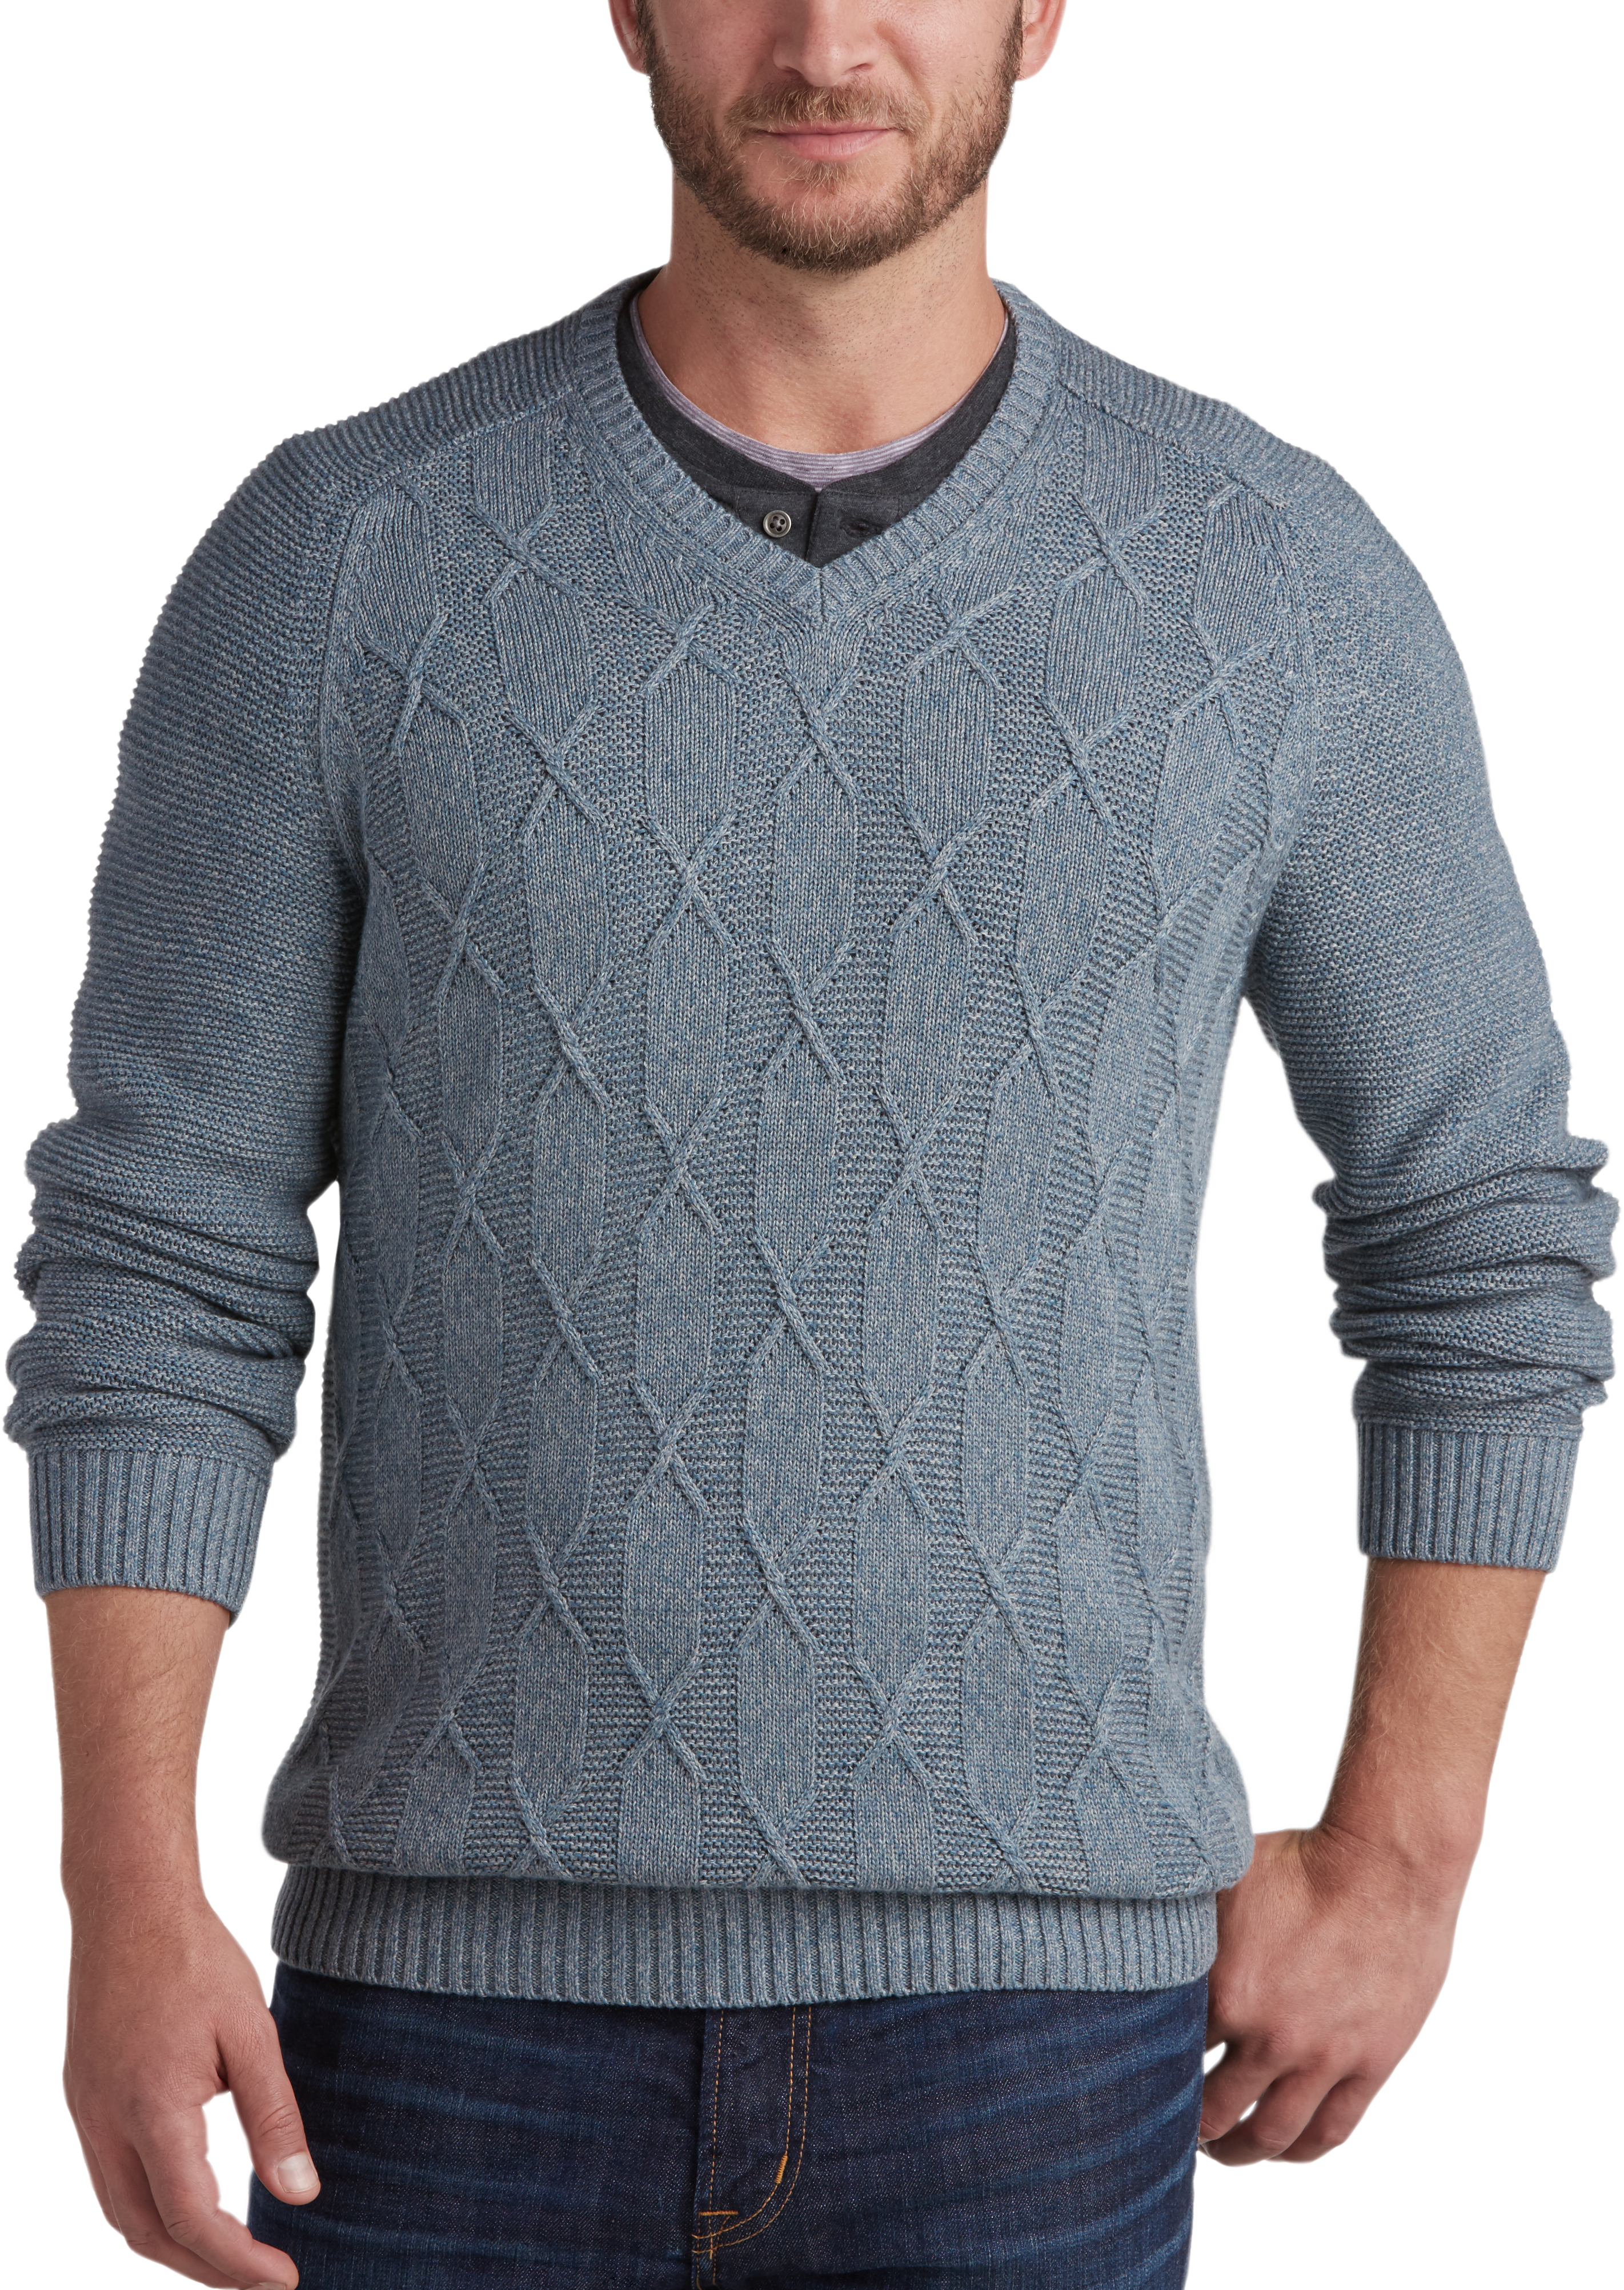 Joseph Abboud Slate Cable-Knit Sweater - Men's Sale | Men's Wearhouse